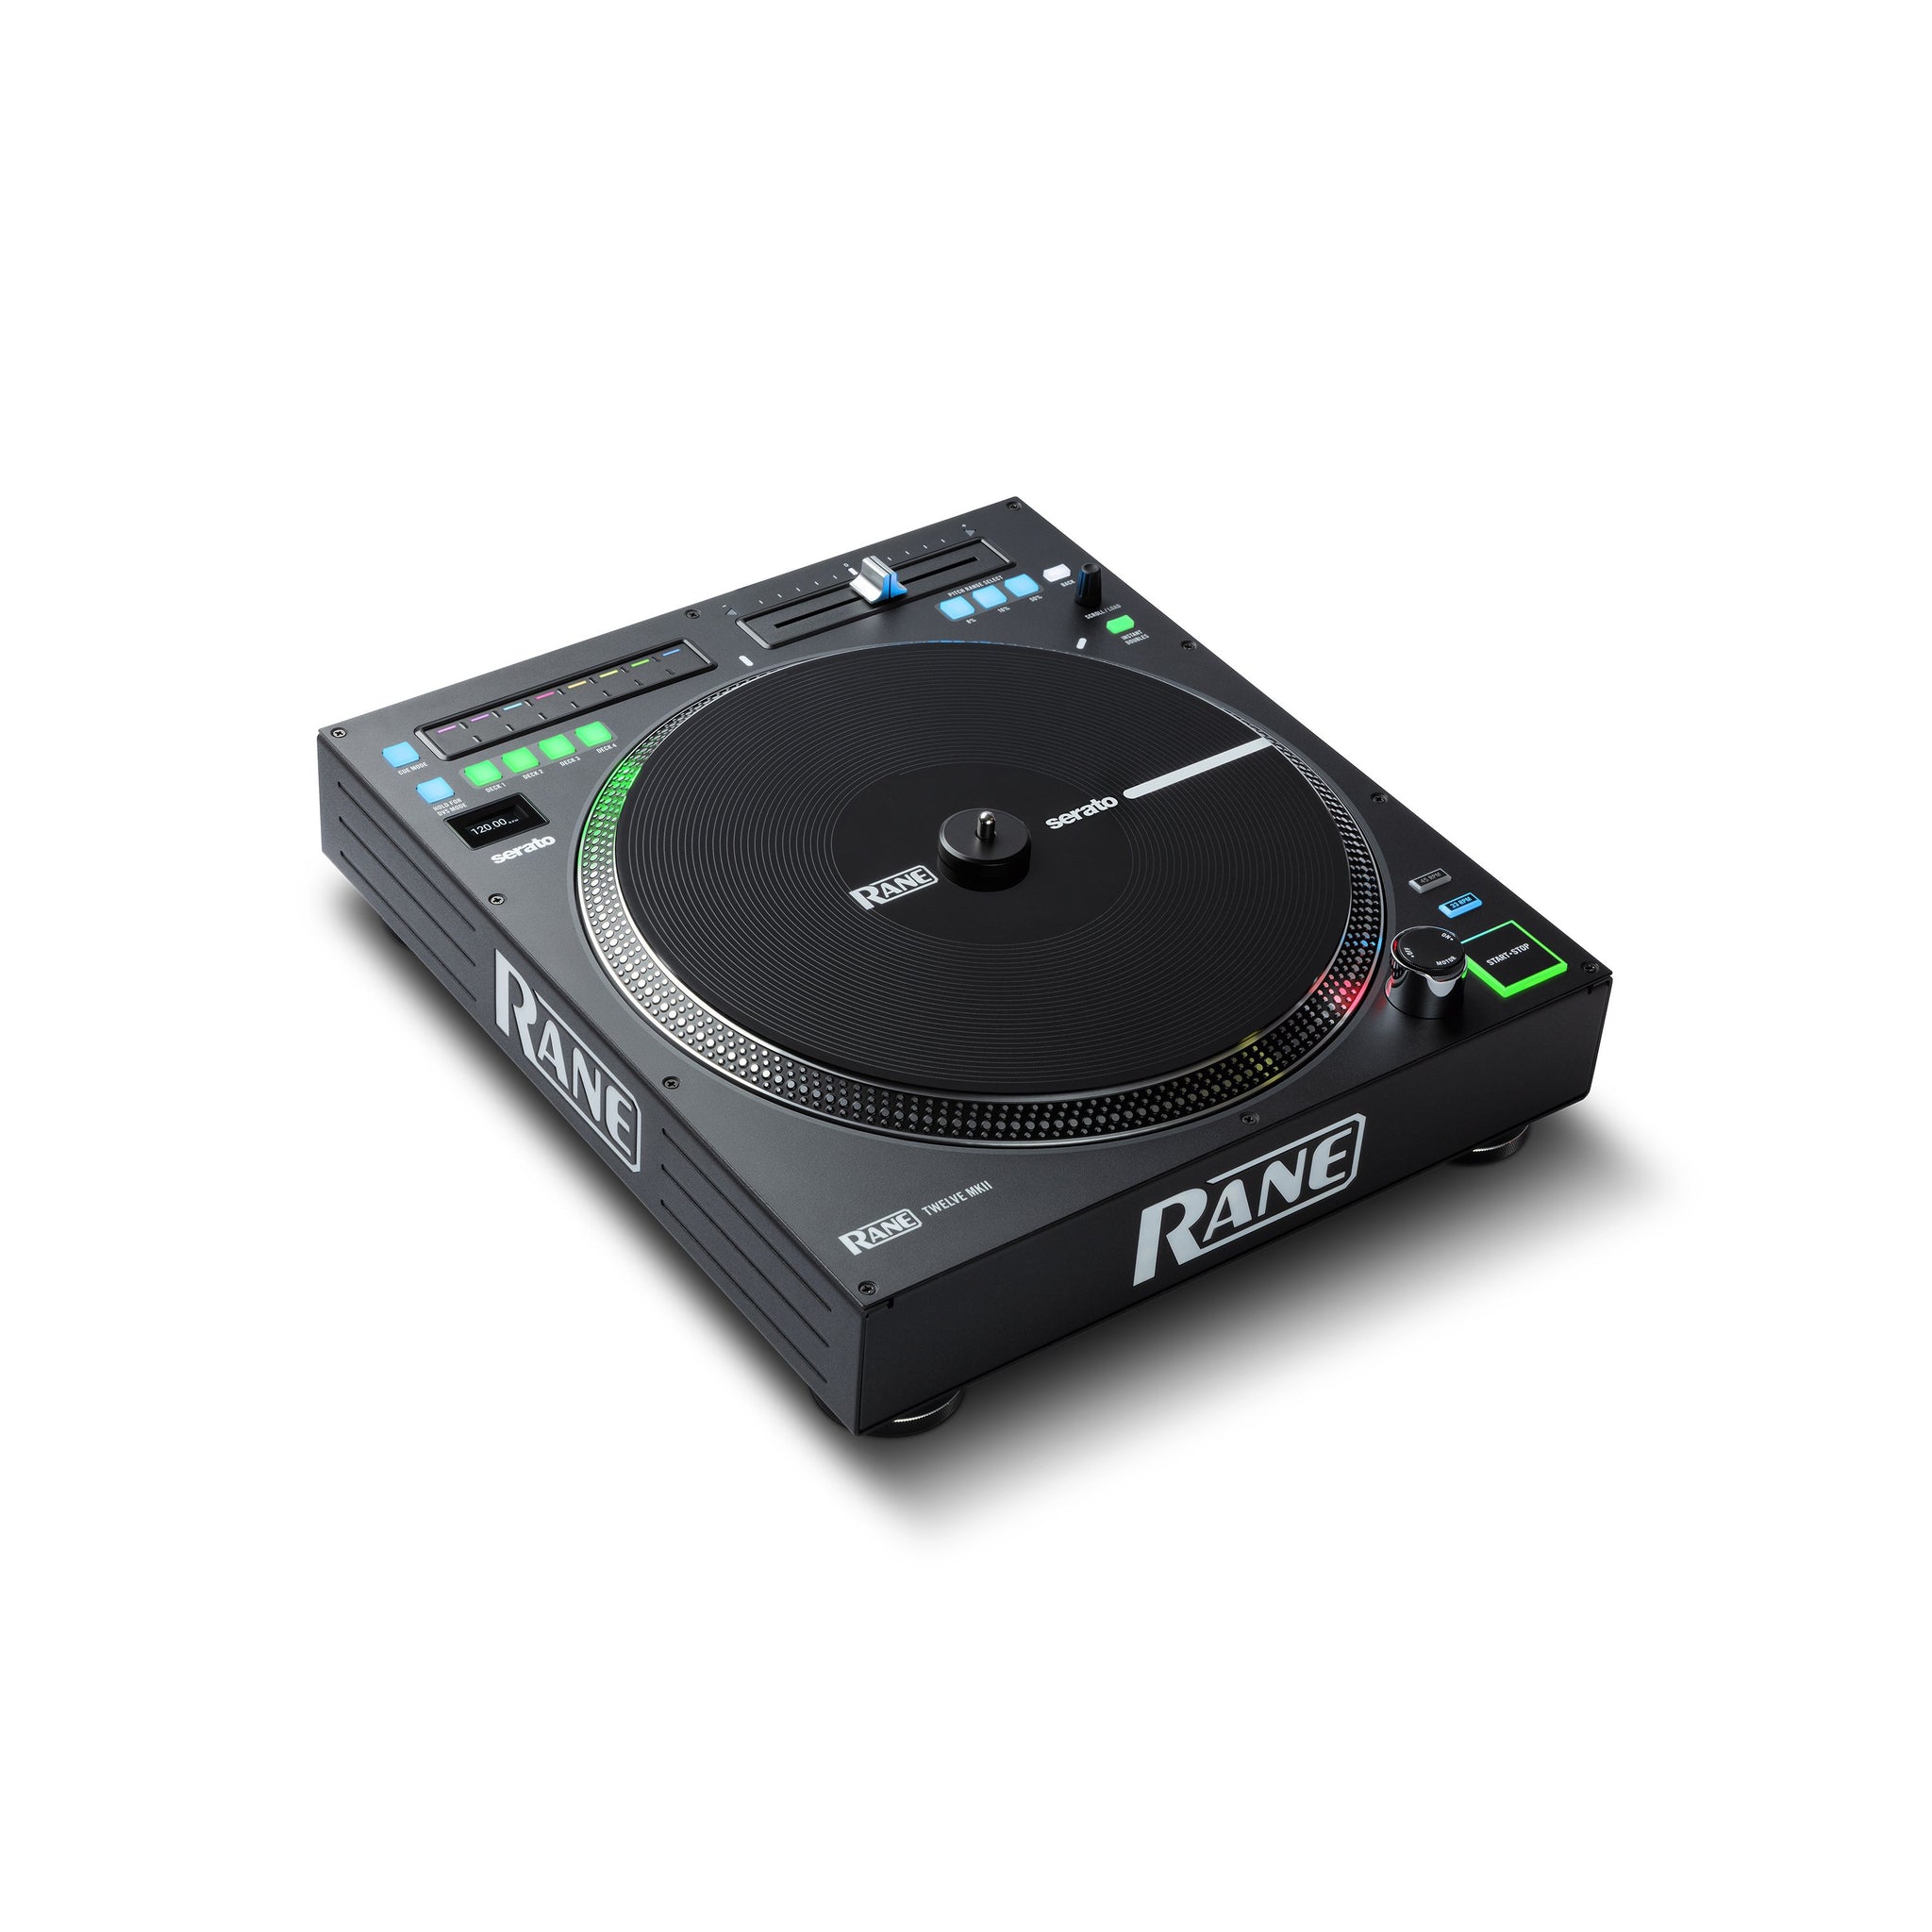 Rane TWELVE MKII 12 Motorized Turntable W/ True Vinyl-Like Touch & ProX  Case